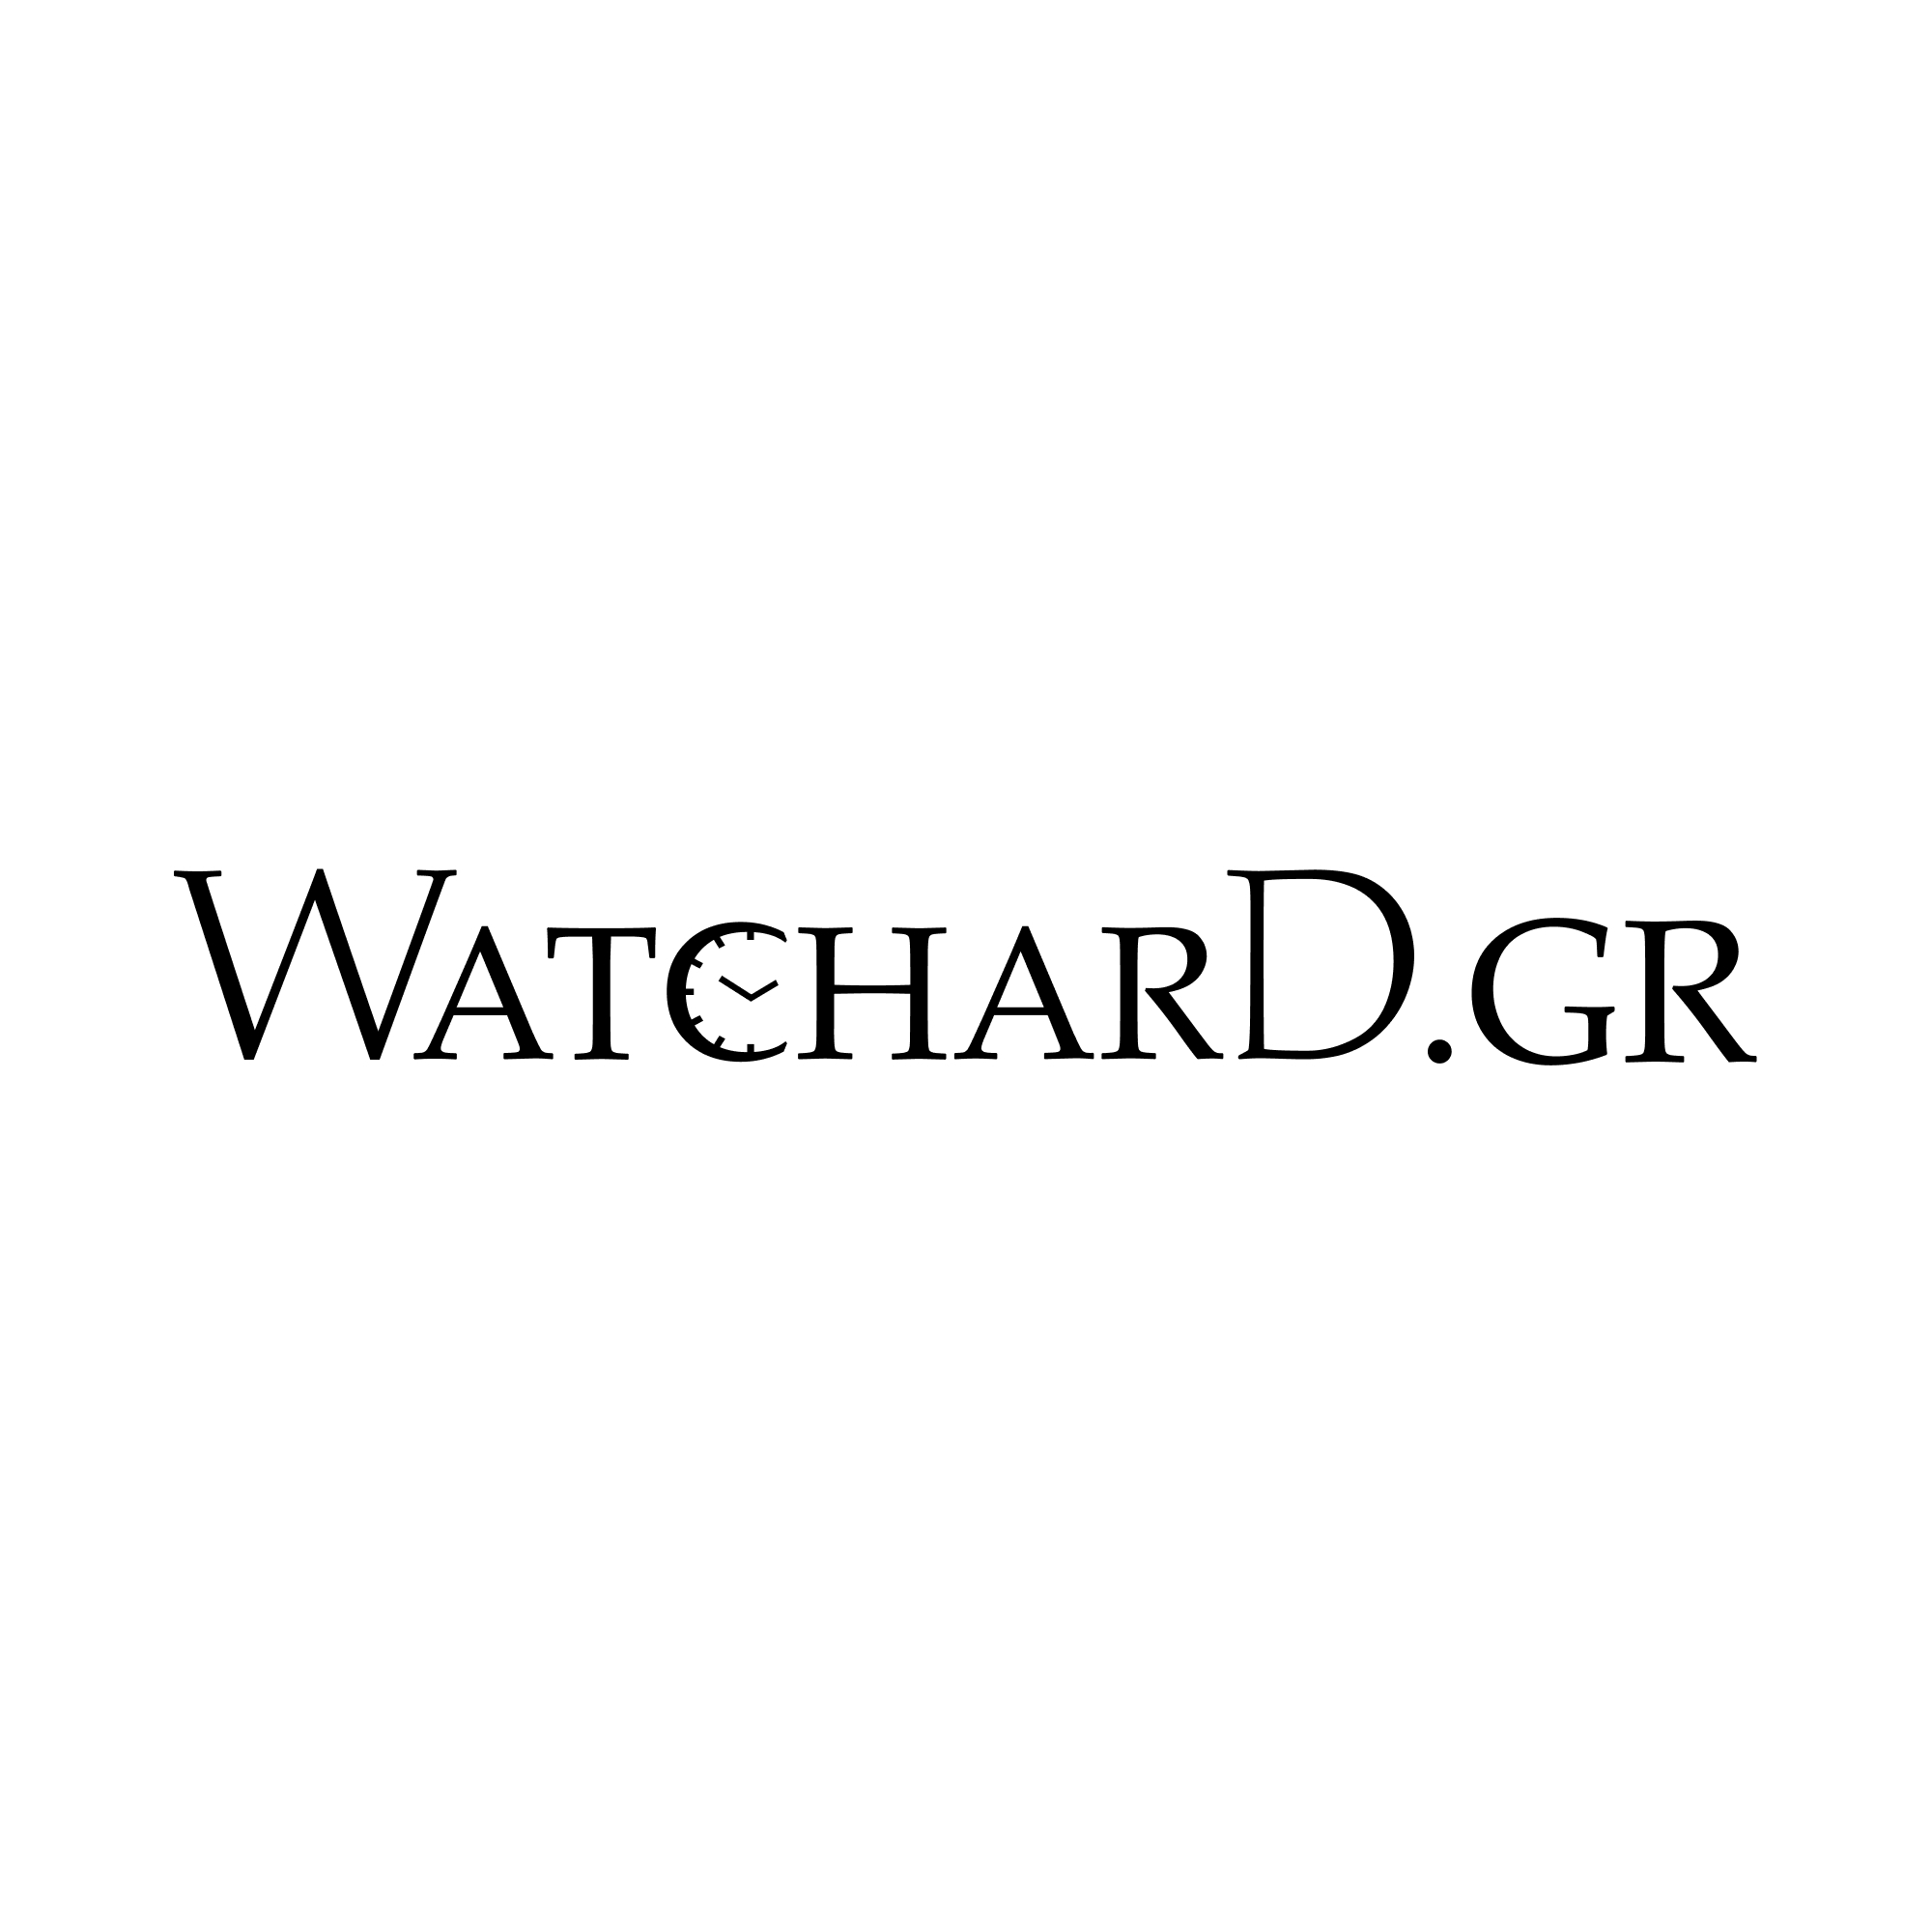 Watchard.gr